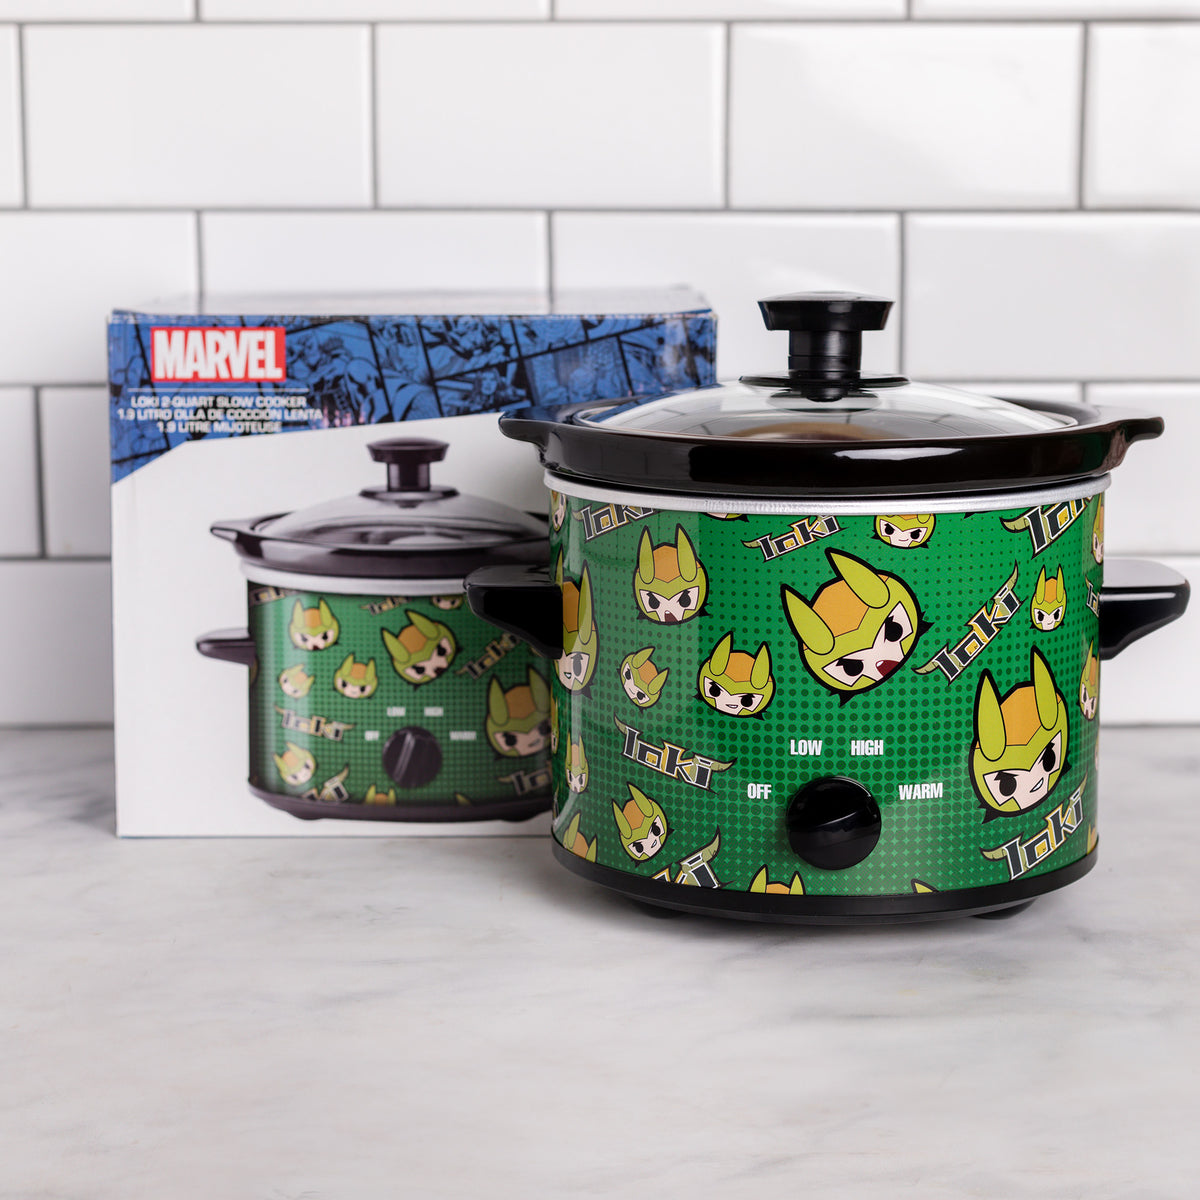 Marvel Loki 2-Qt Slow Cooker